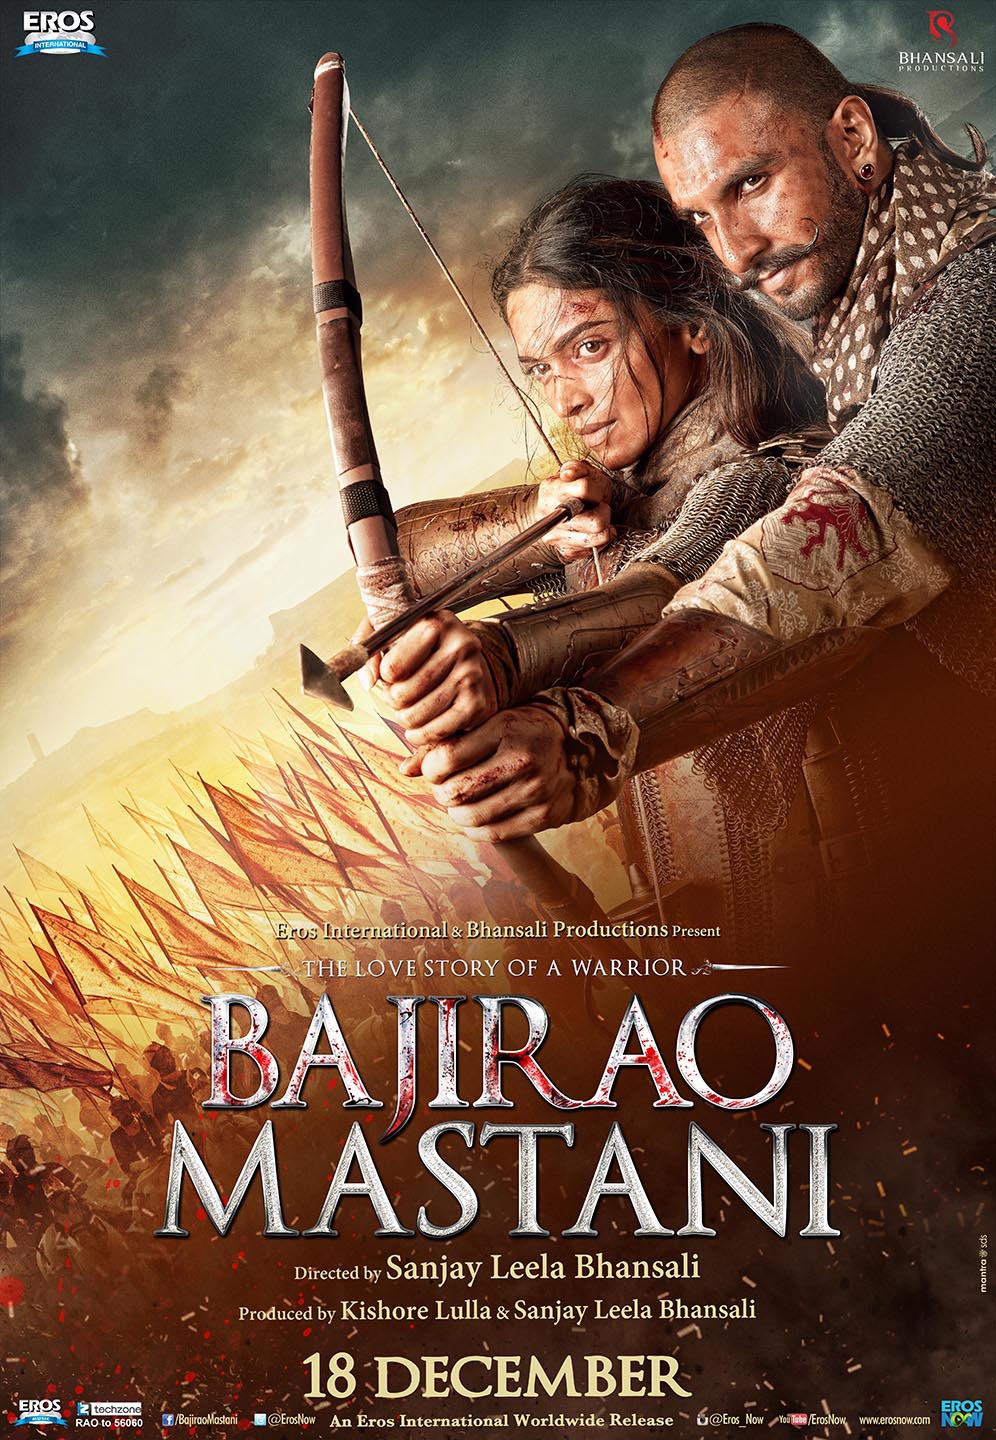 Extra Large Movie Poster Image for Bajirao Mastani (#6 of 12)